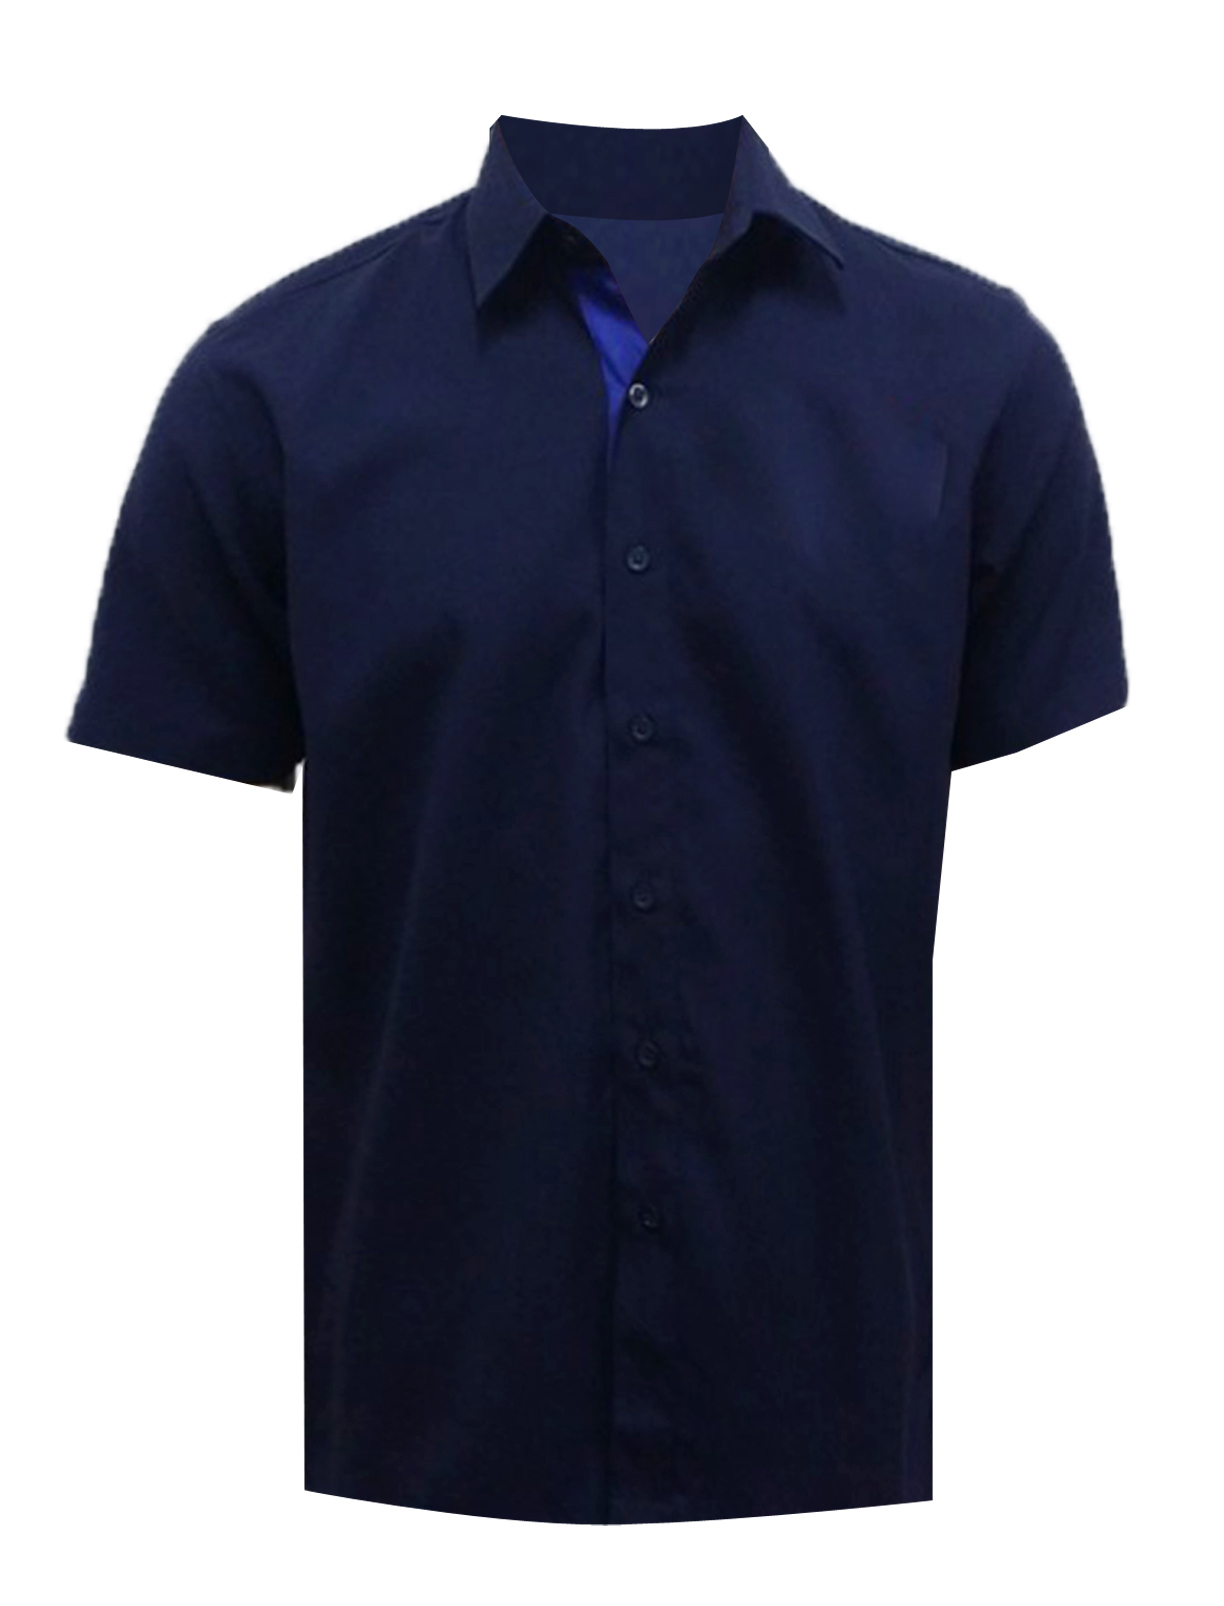 BKARR001 – Customized Navy Blue/Royal Blue Trim Short Sleeve Shirt ...